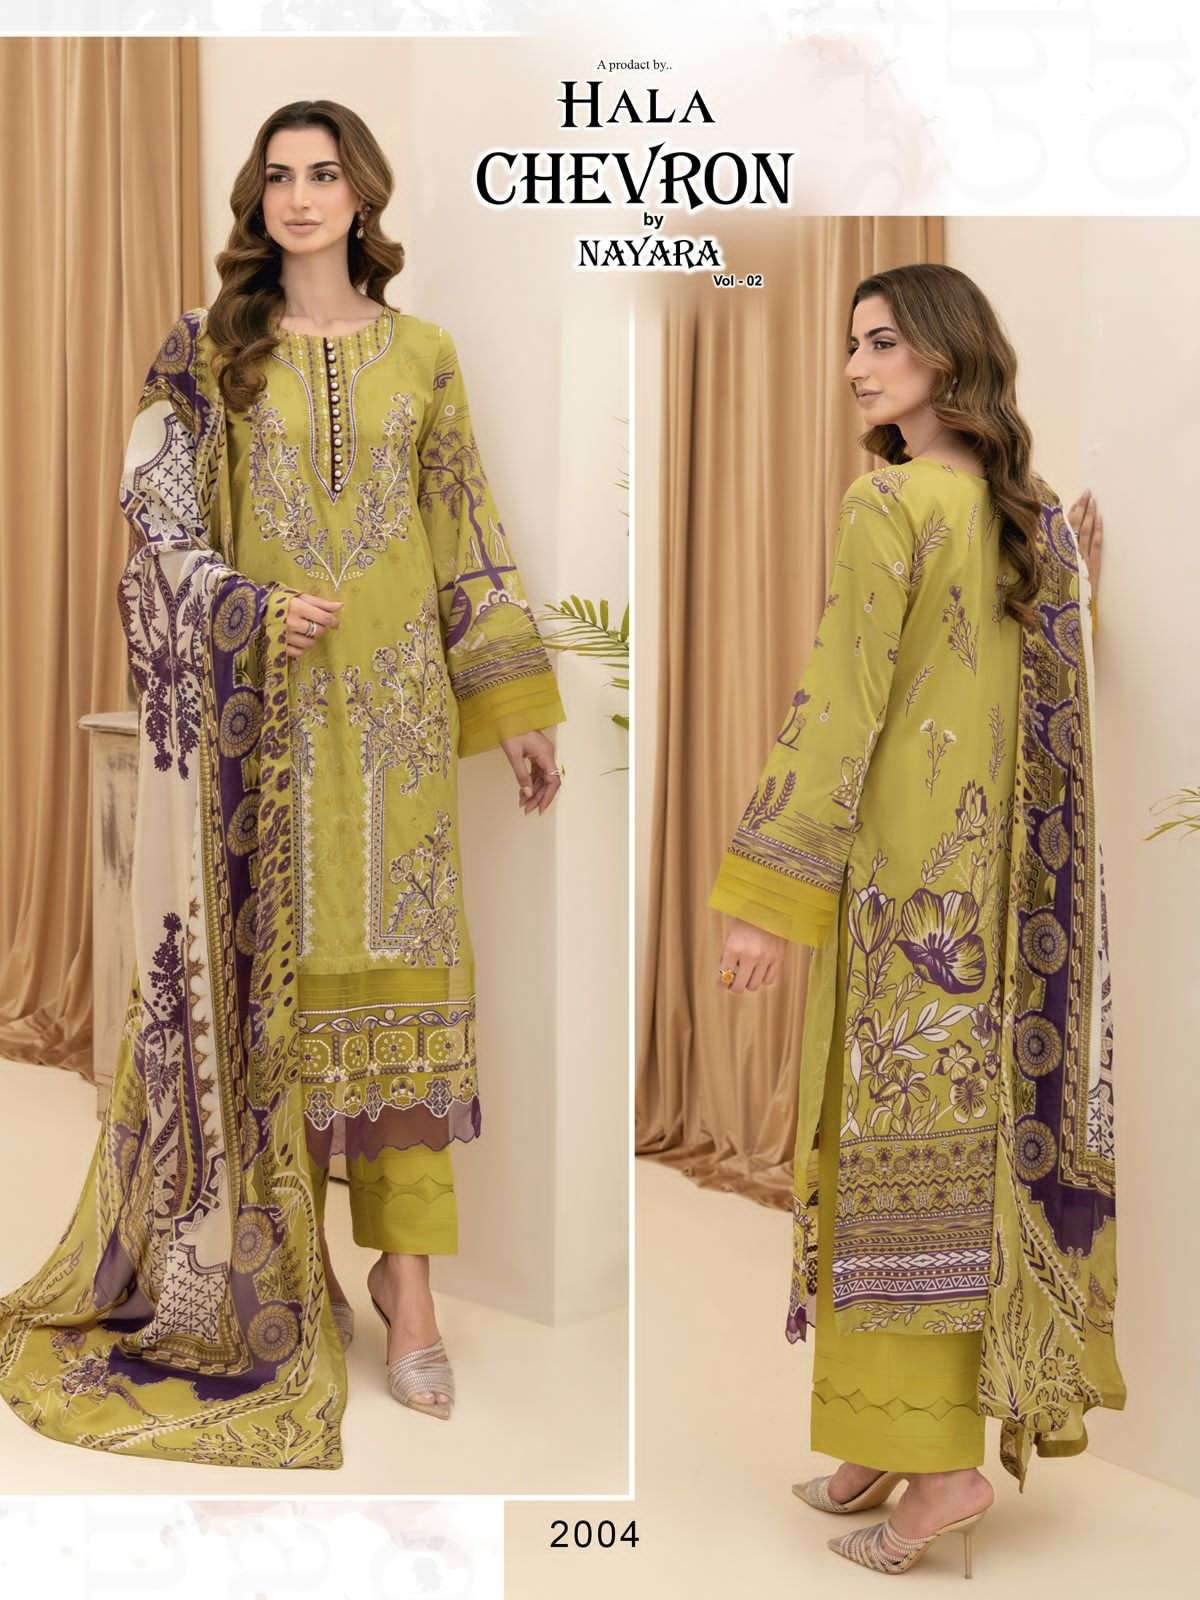 chevron by nayara vol-2 by hala heavy cotton karachi printed salwar kameez wholesale price surat